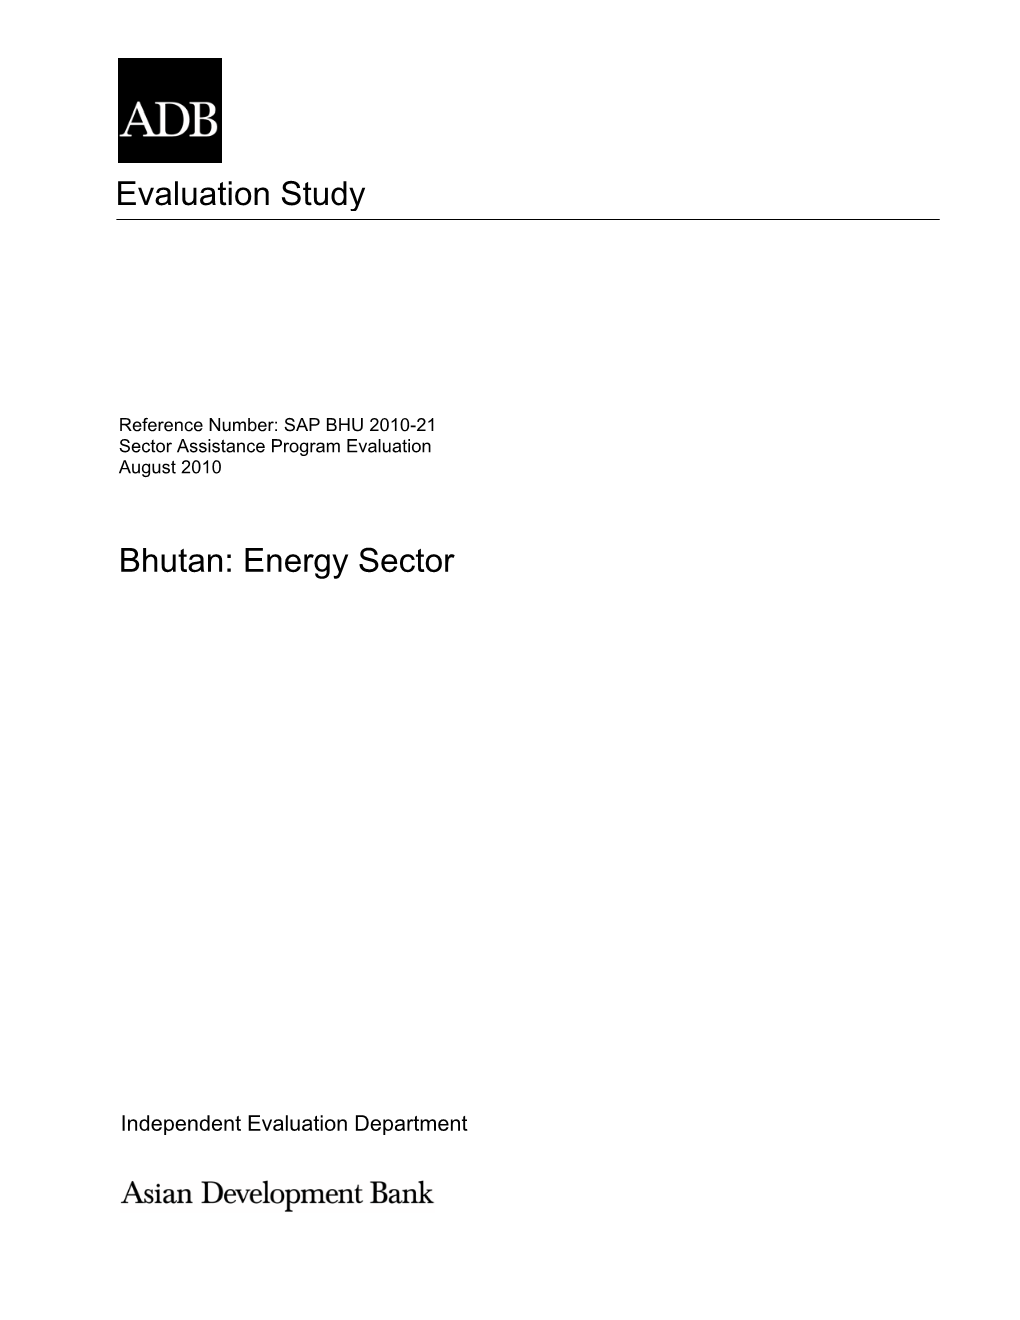 Bhutan Energy Sector